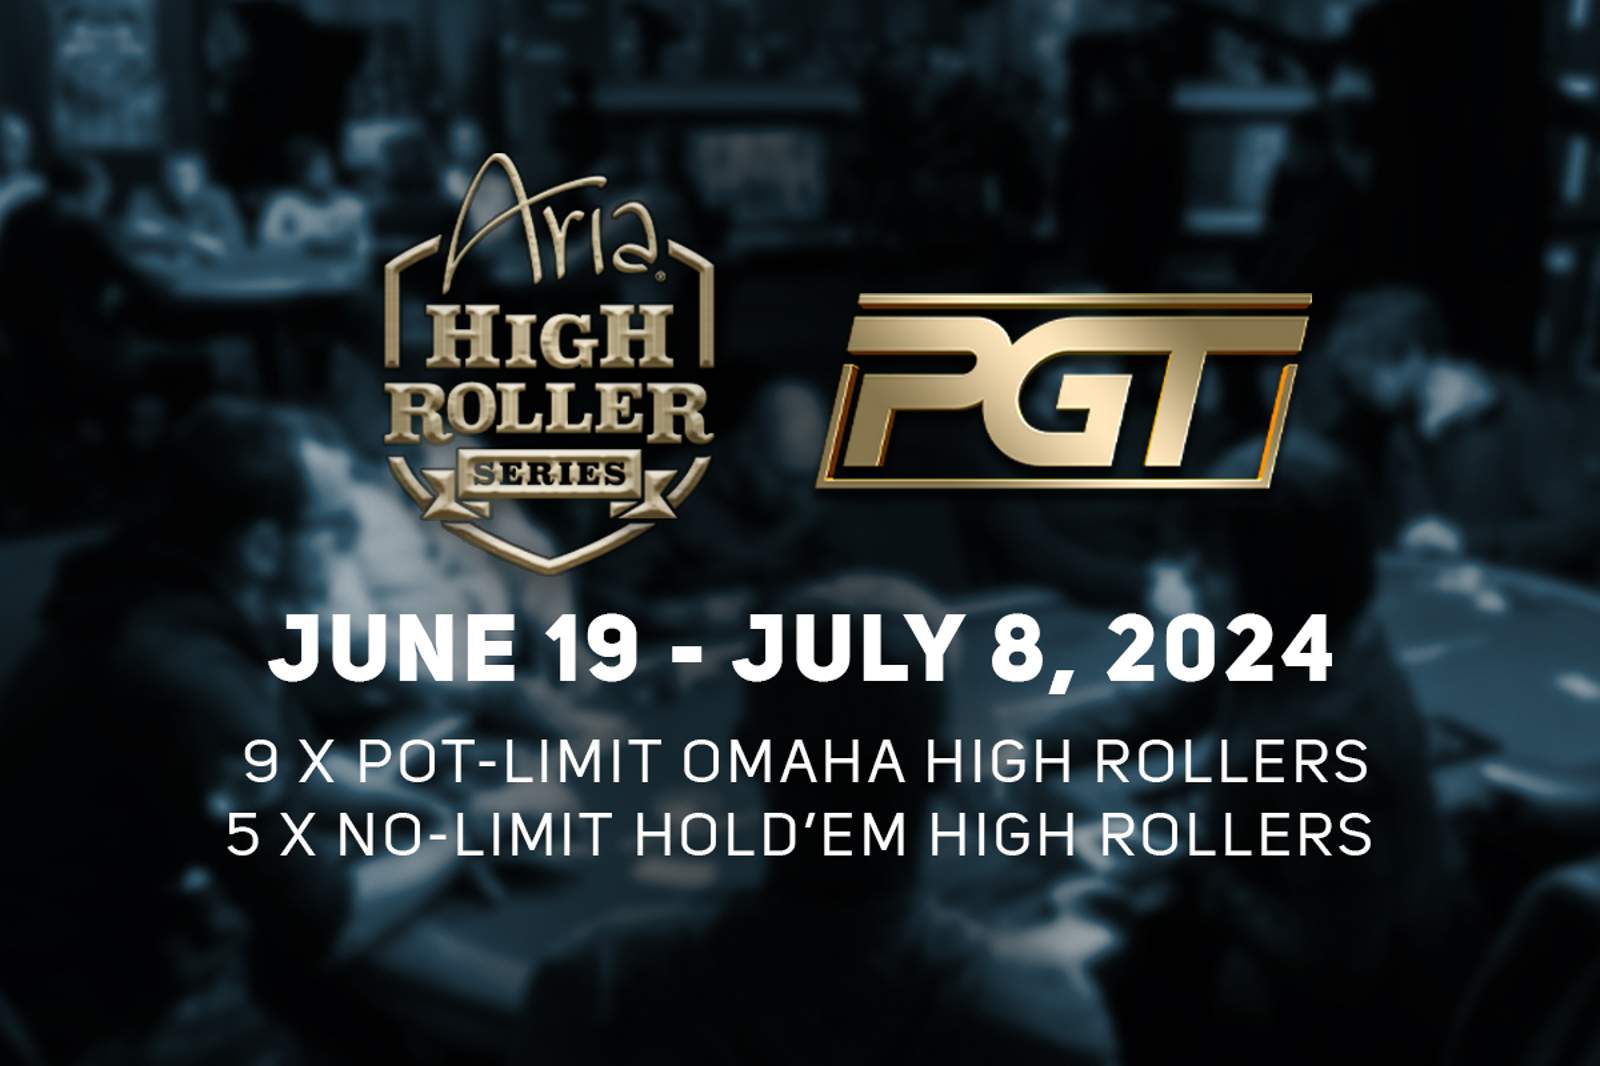 ARIA High Roller Series Schedule: June 19 - July 8, 2024